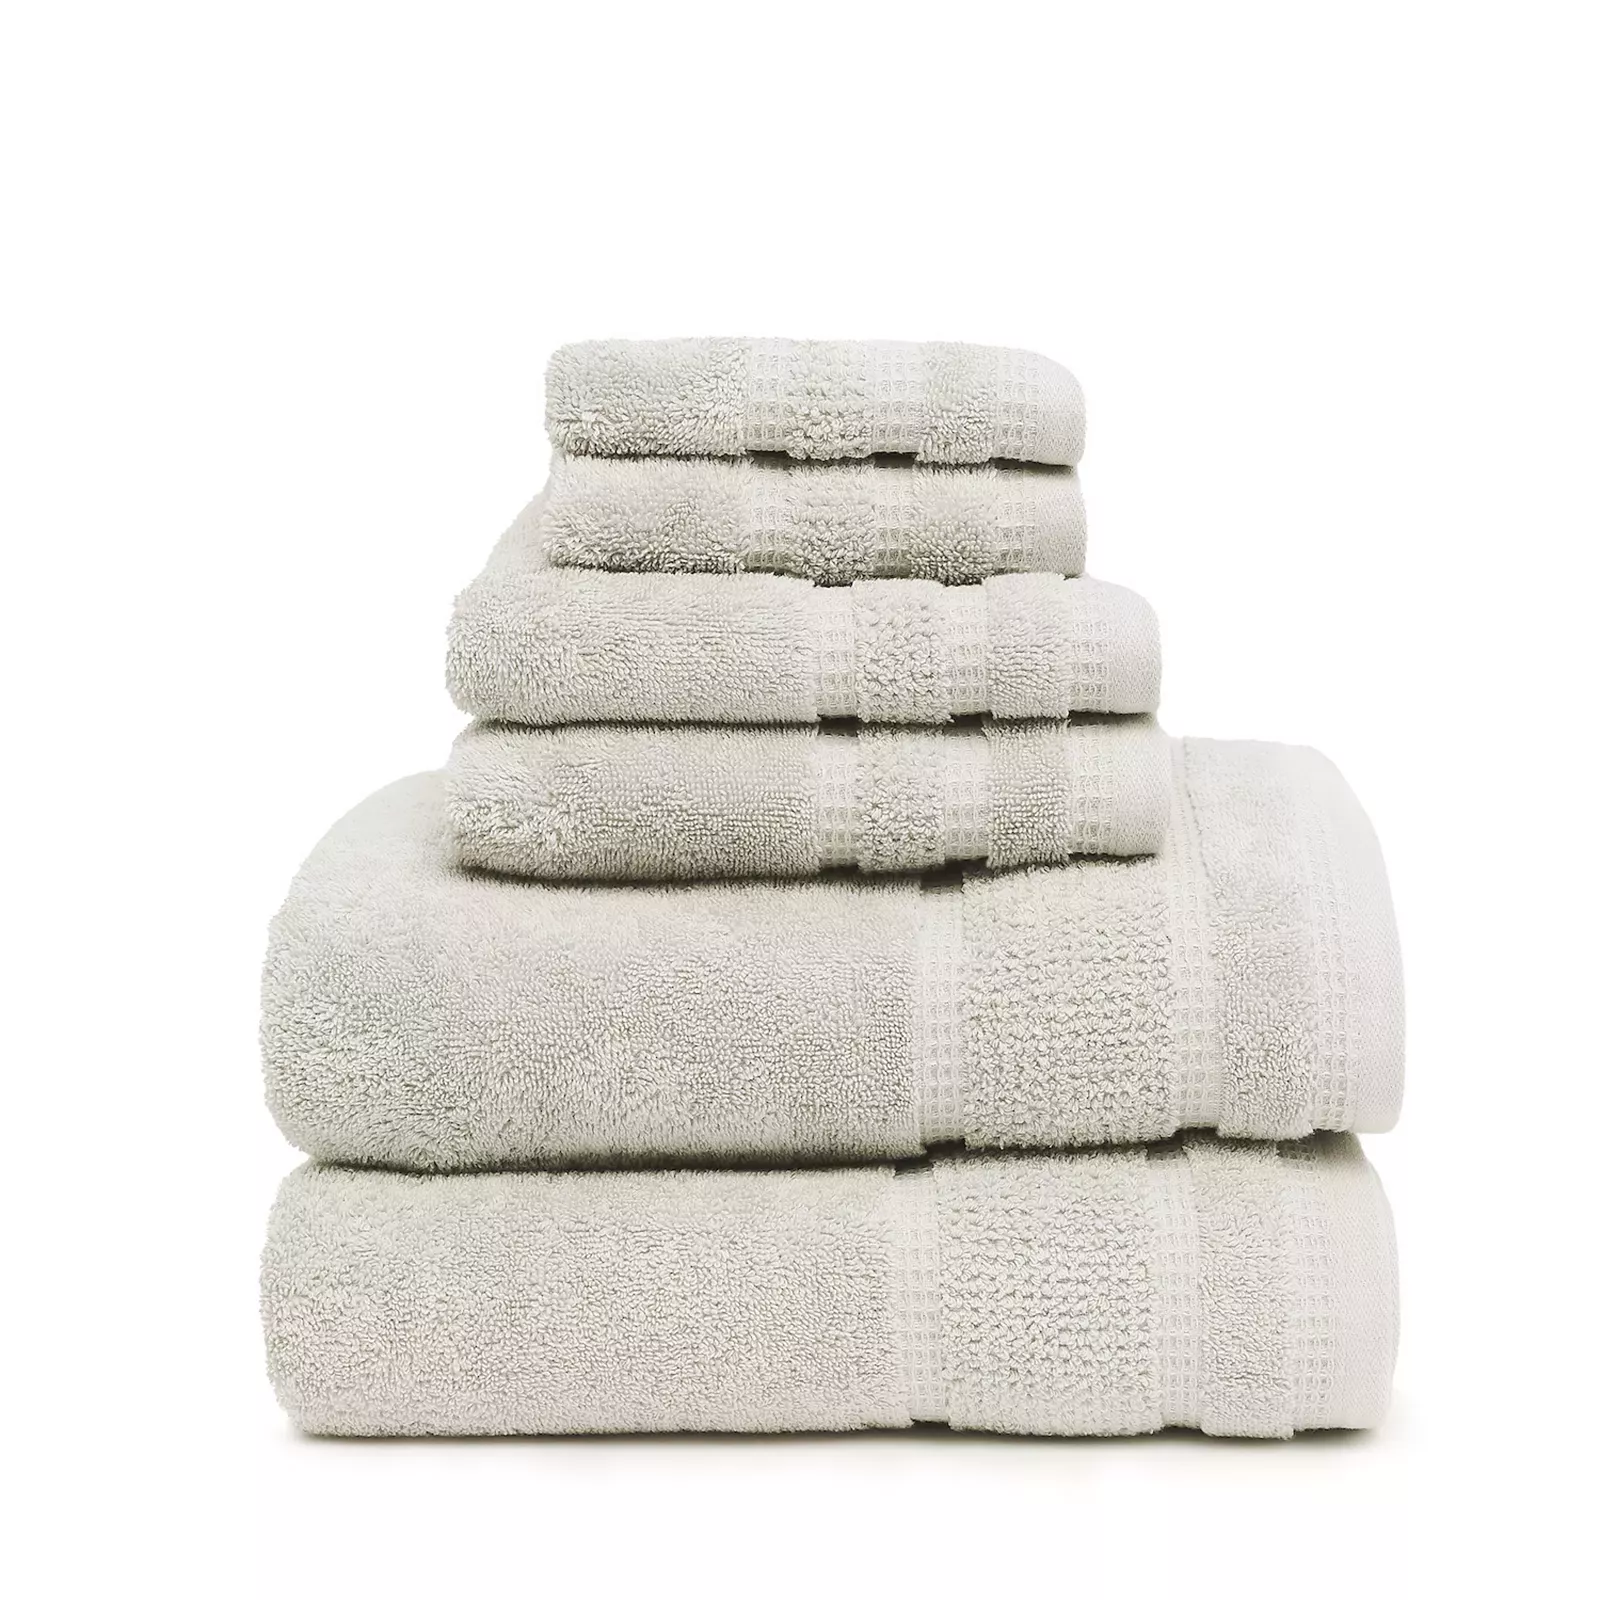 Koolaburra by UGG Beach Towels On Sale! Best Prices!